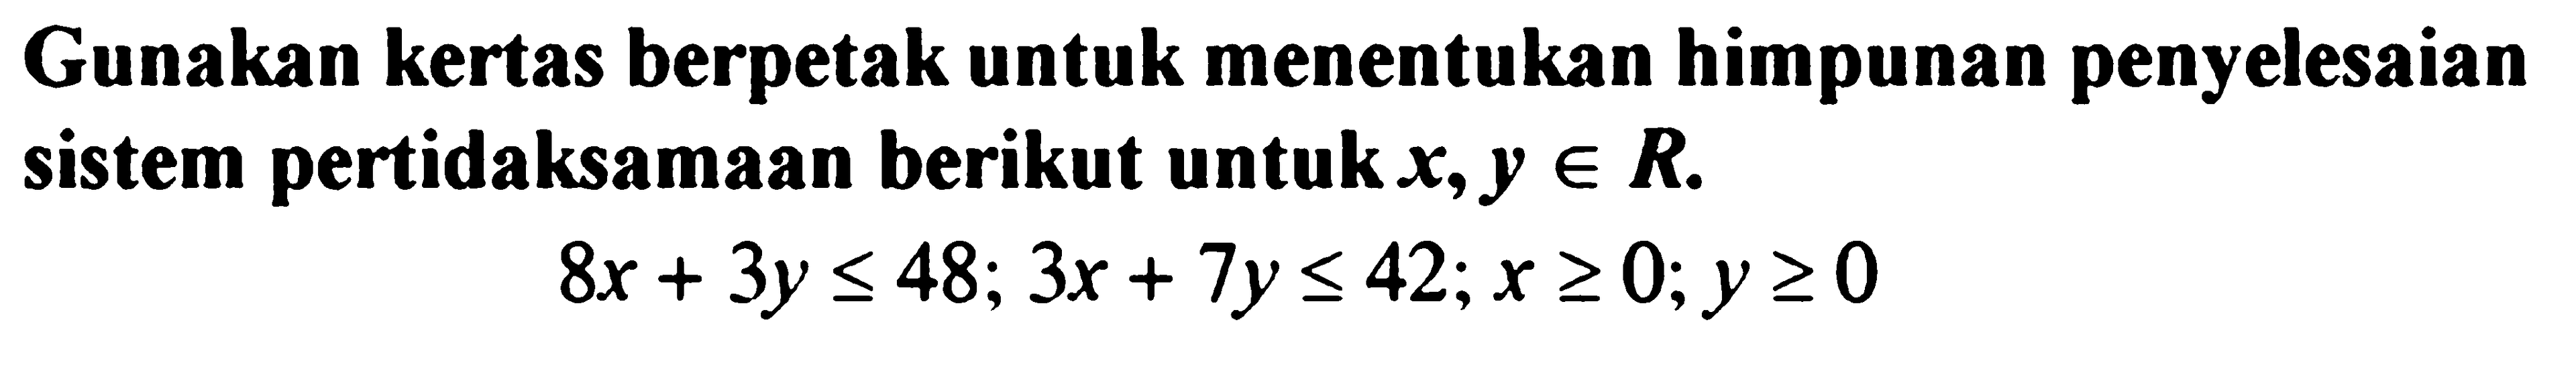 Gunakan kertas berpetak untuk menentukan himpunan penyelesaian sistem pertidaksamaan berikut untuk x,y e R. 8x+3y<=48; 3x+7y<=42; x>=0; y>=0